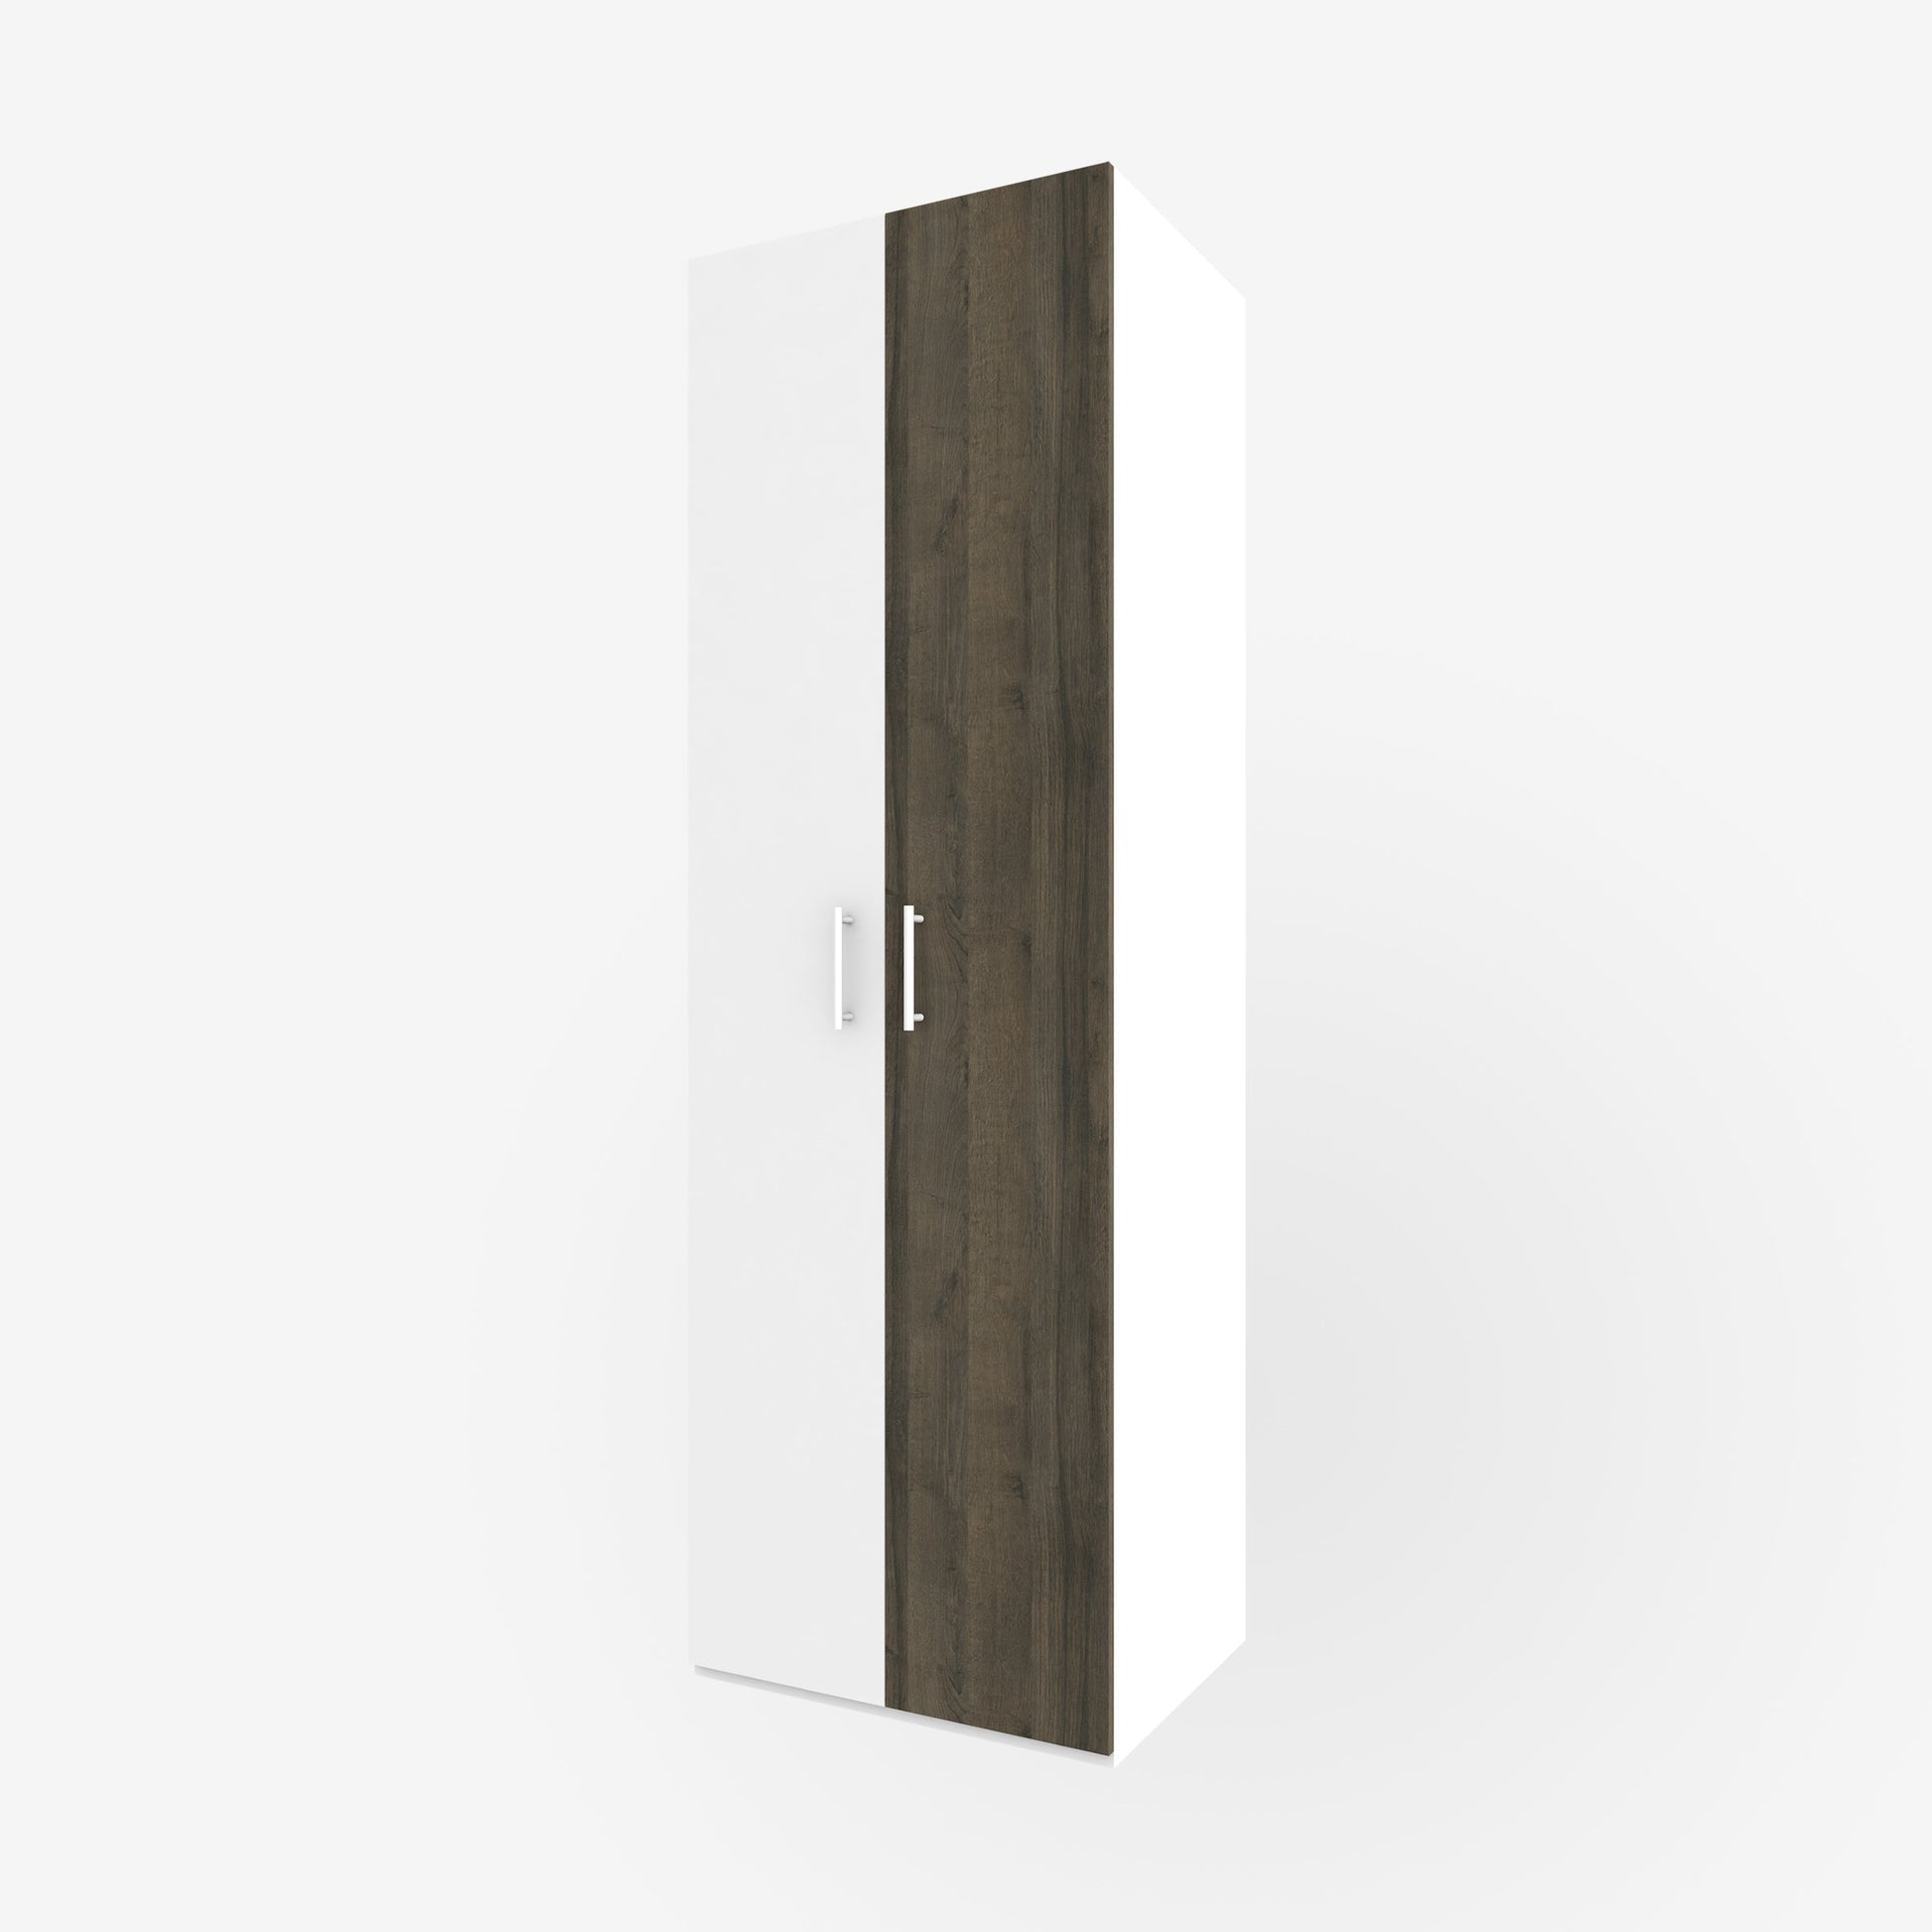 15" x 93" dark wood tone rockwood slab door for Ikea or Swedeboxx pax closet cabinet